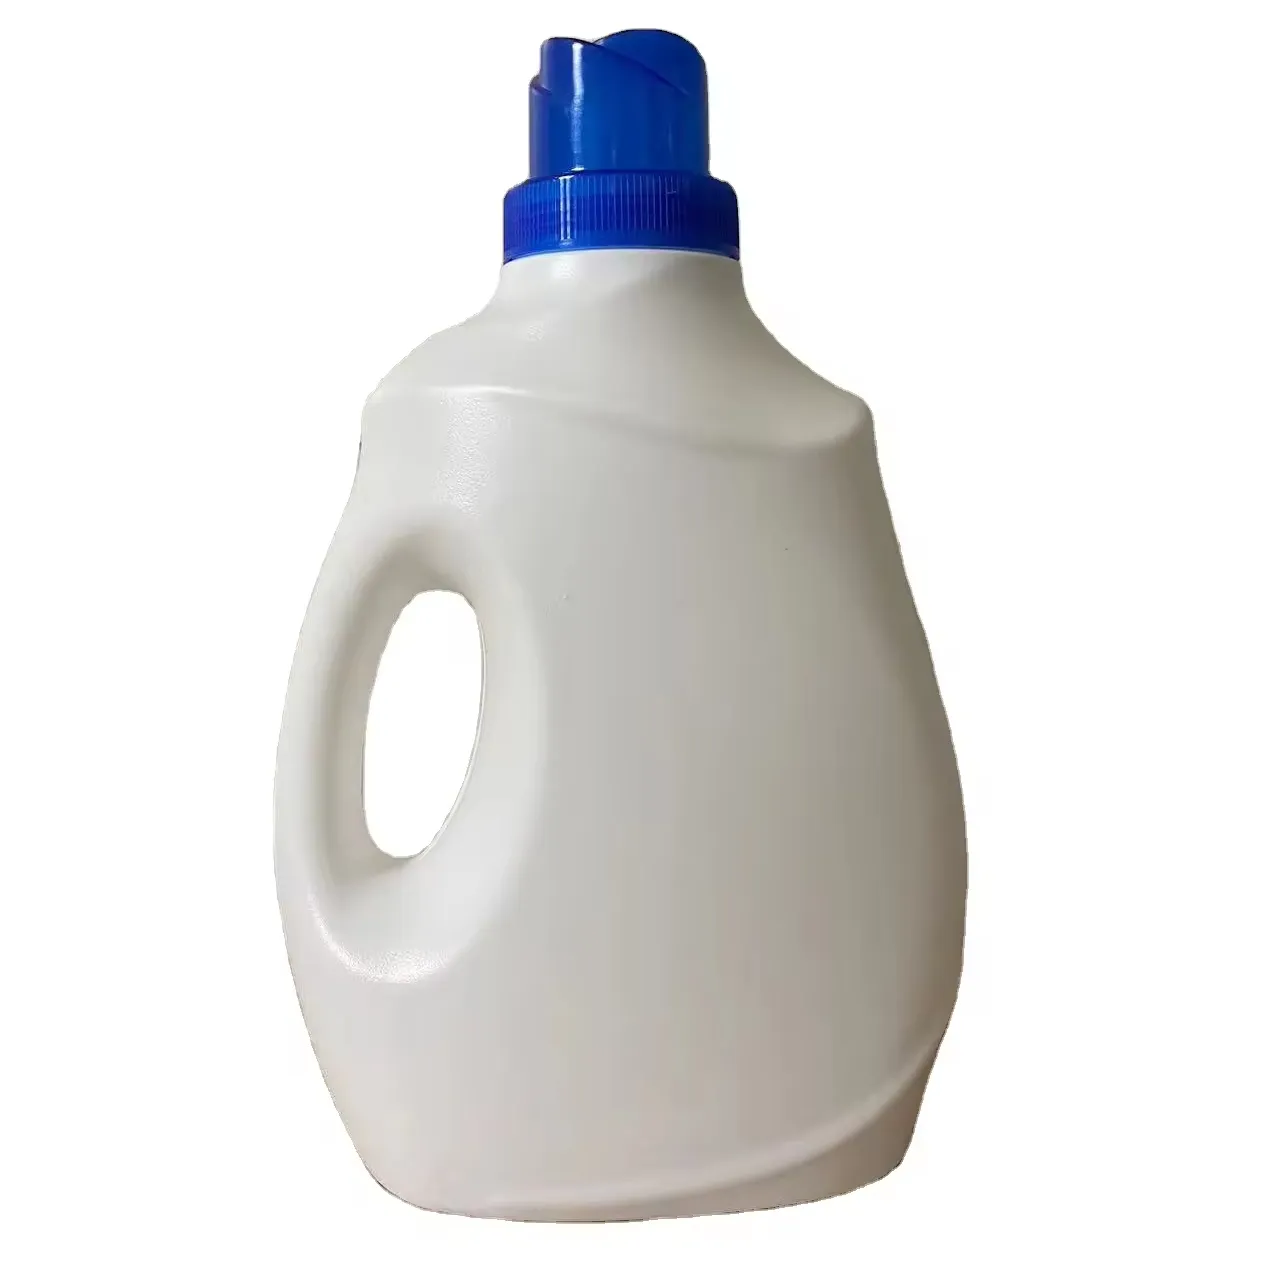 Garrafa plástica 1000ml para detergente líquido, garrafa de plástico de alta qualidade para lavar roupa, 1 litro, garrafa de detergente líquido 2000ml